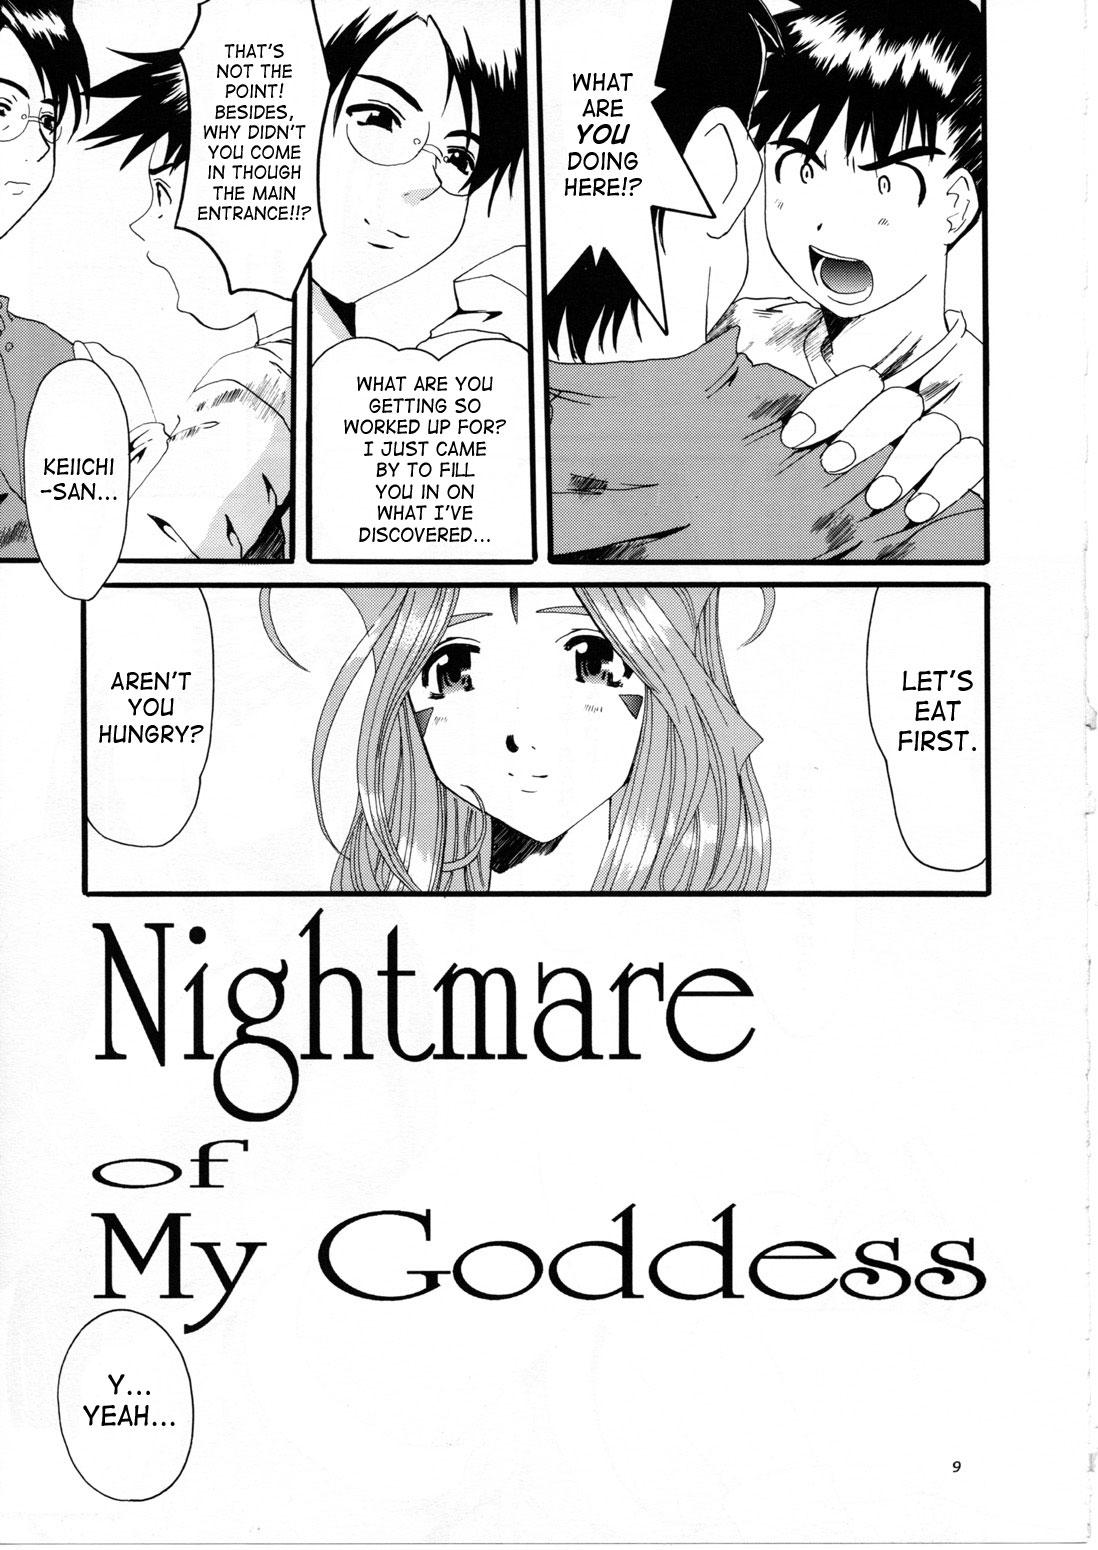 Nightmare of My Goddess Vol. 7 7